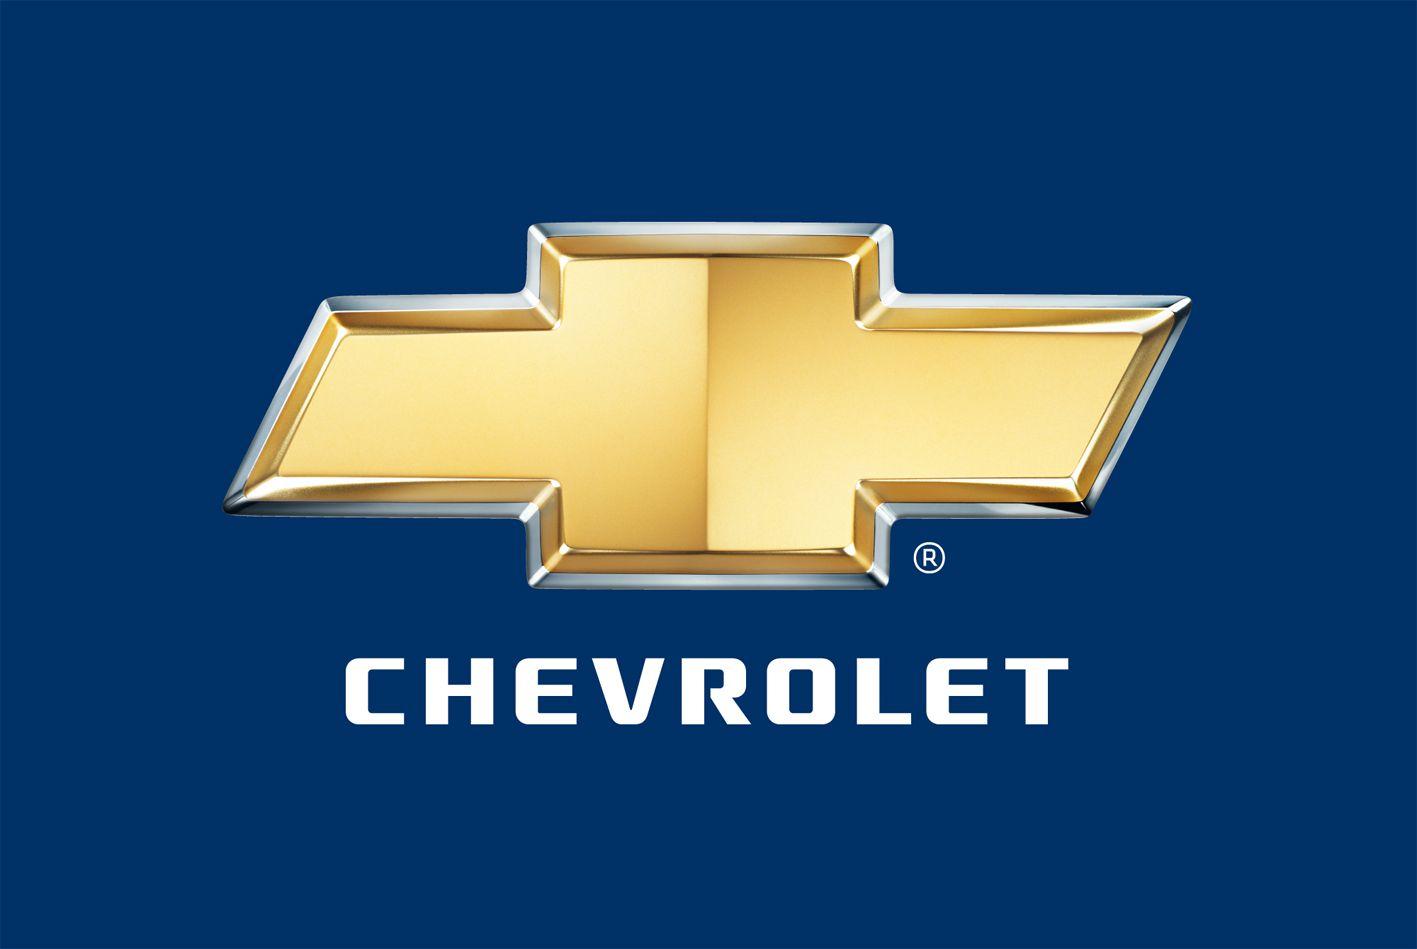 Chevrolet Car Logo - Chevy Logo, Chevrolet Car Symbol Meaning and History. Car Brand